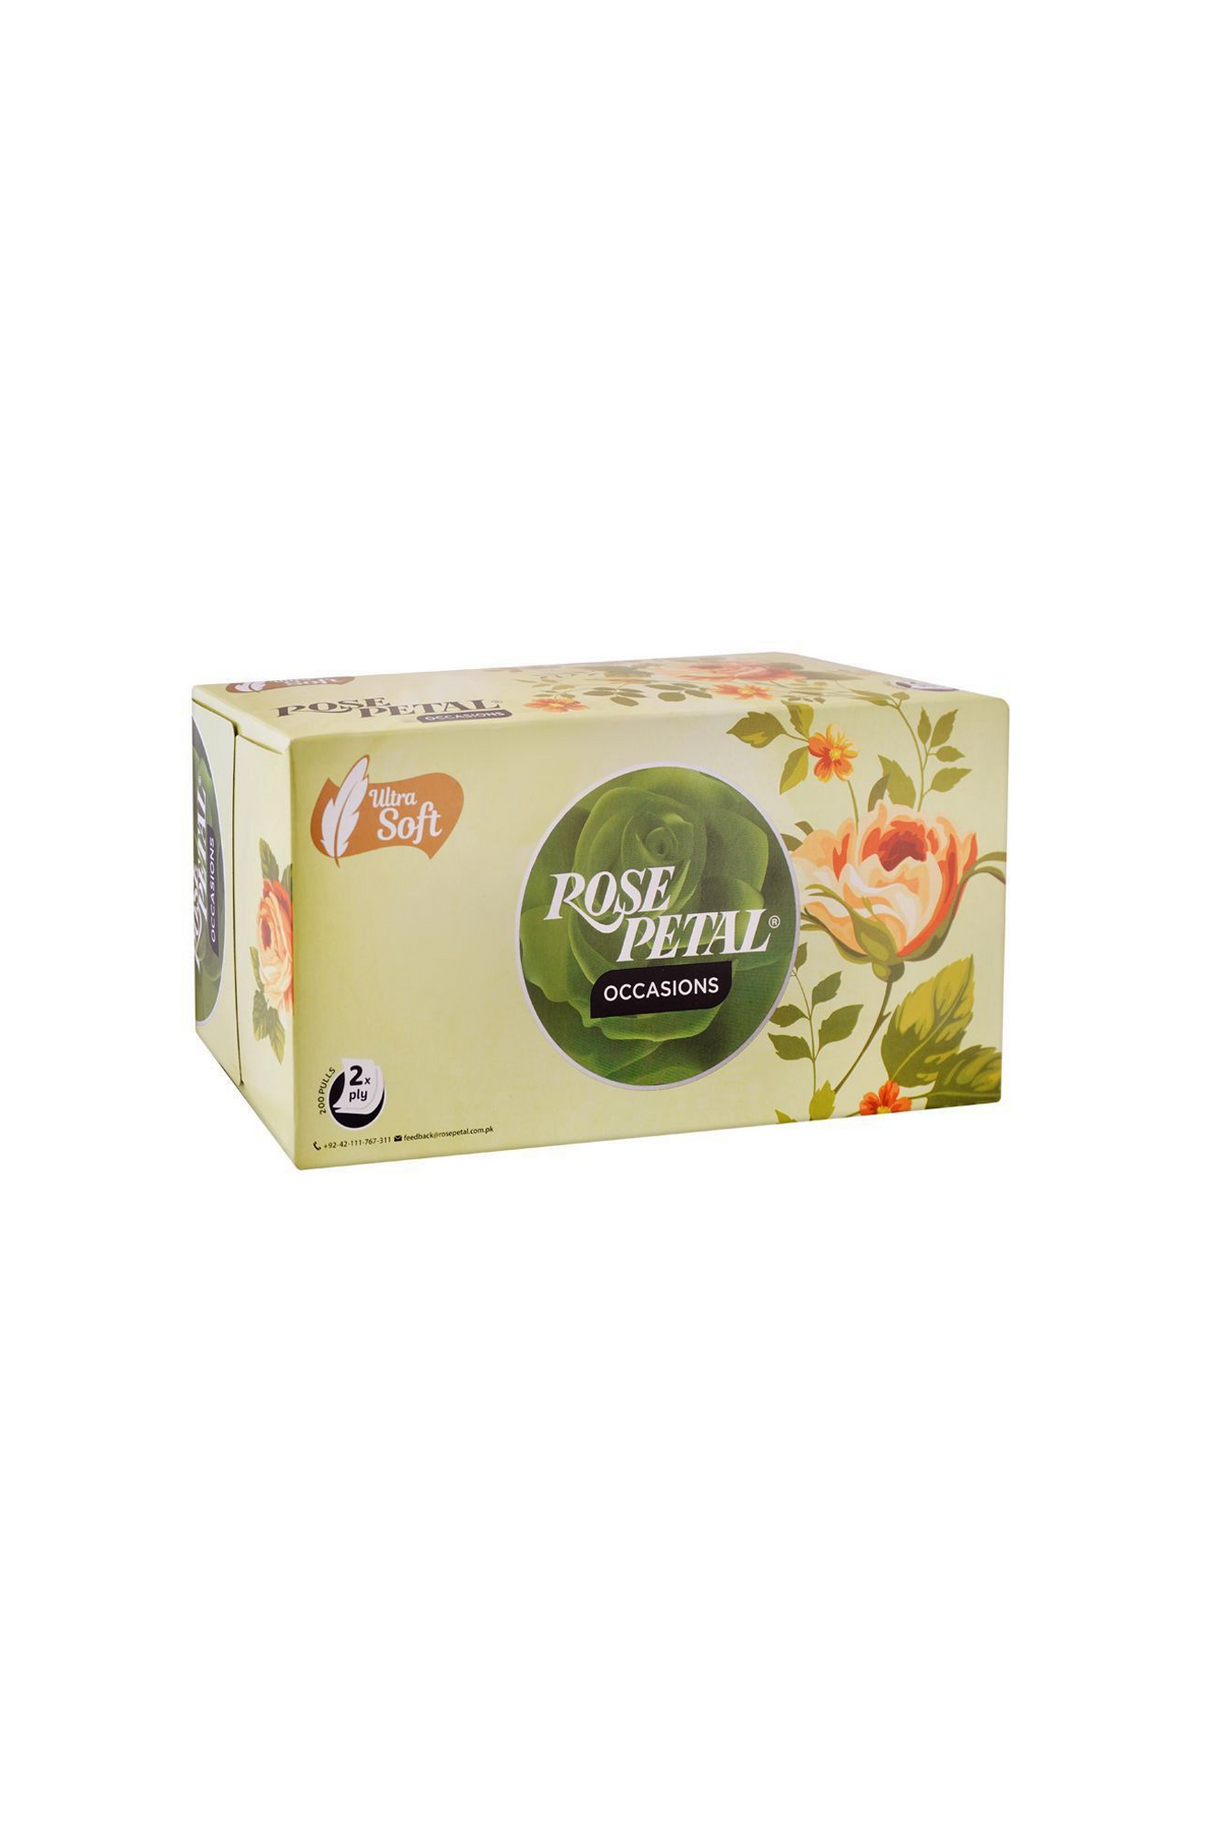 rose petal tissue paper occasions 200pc